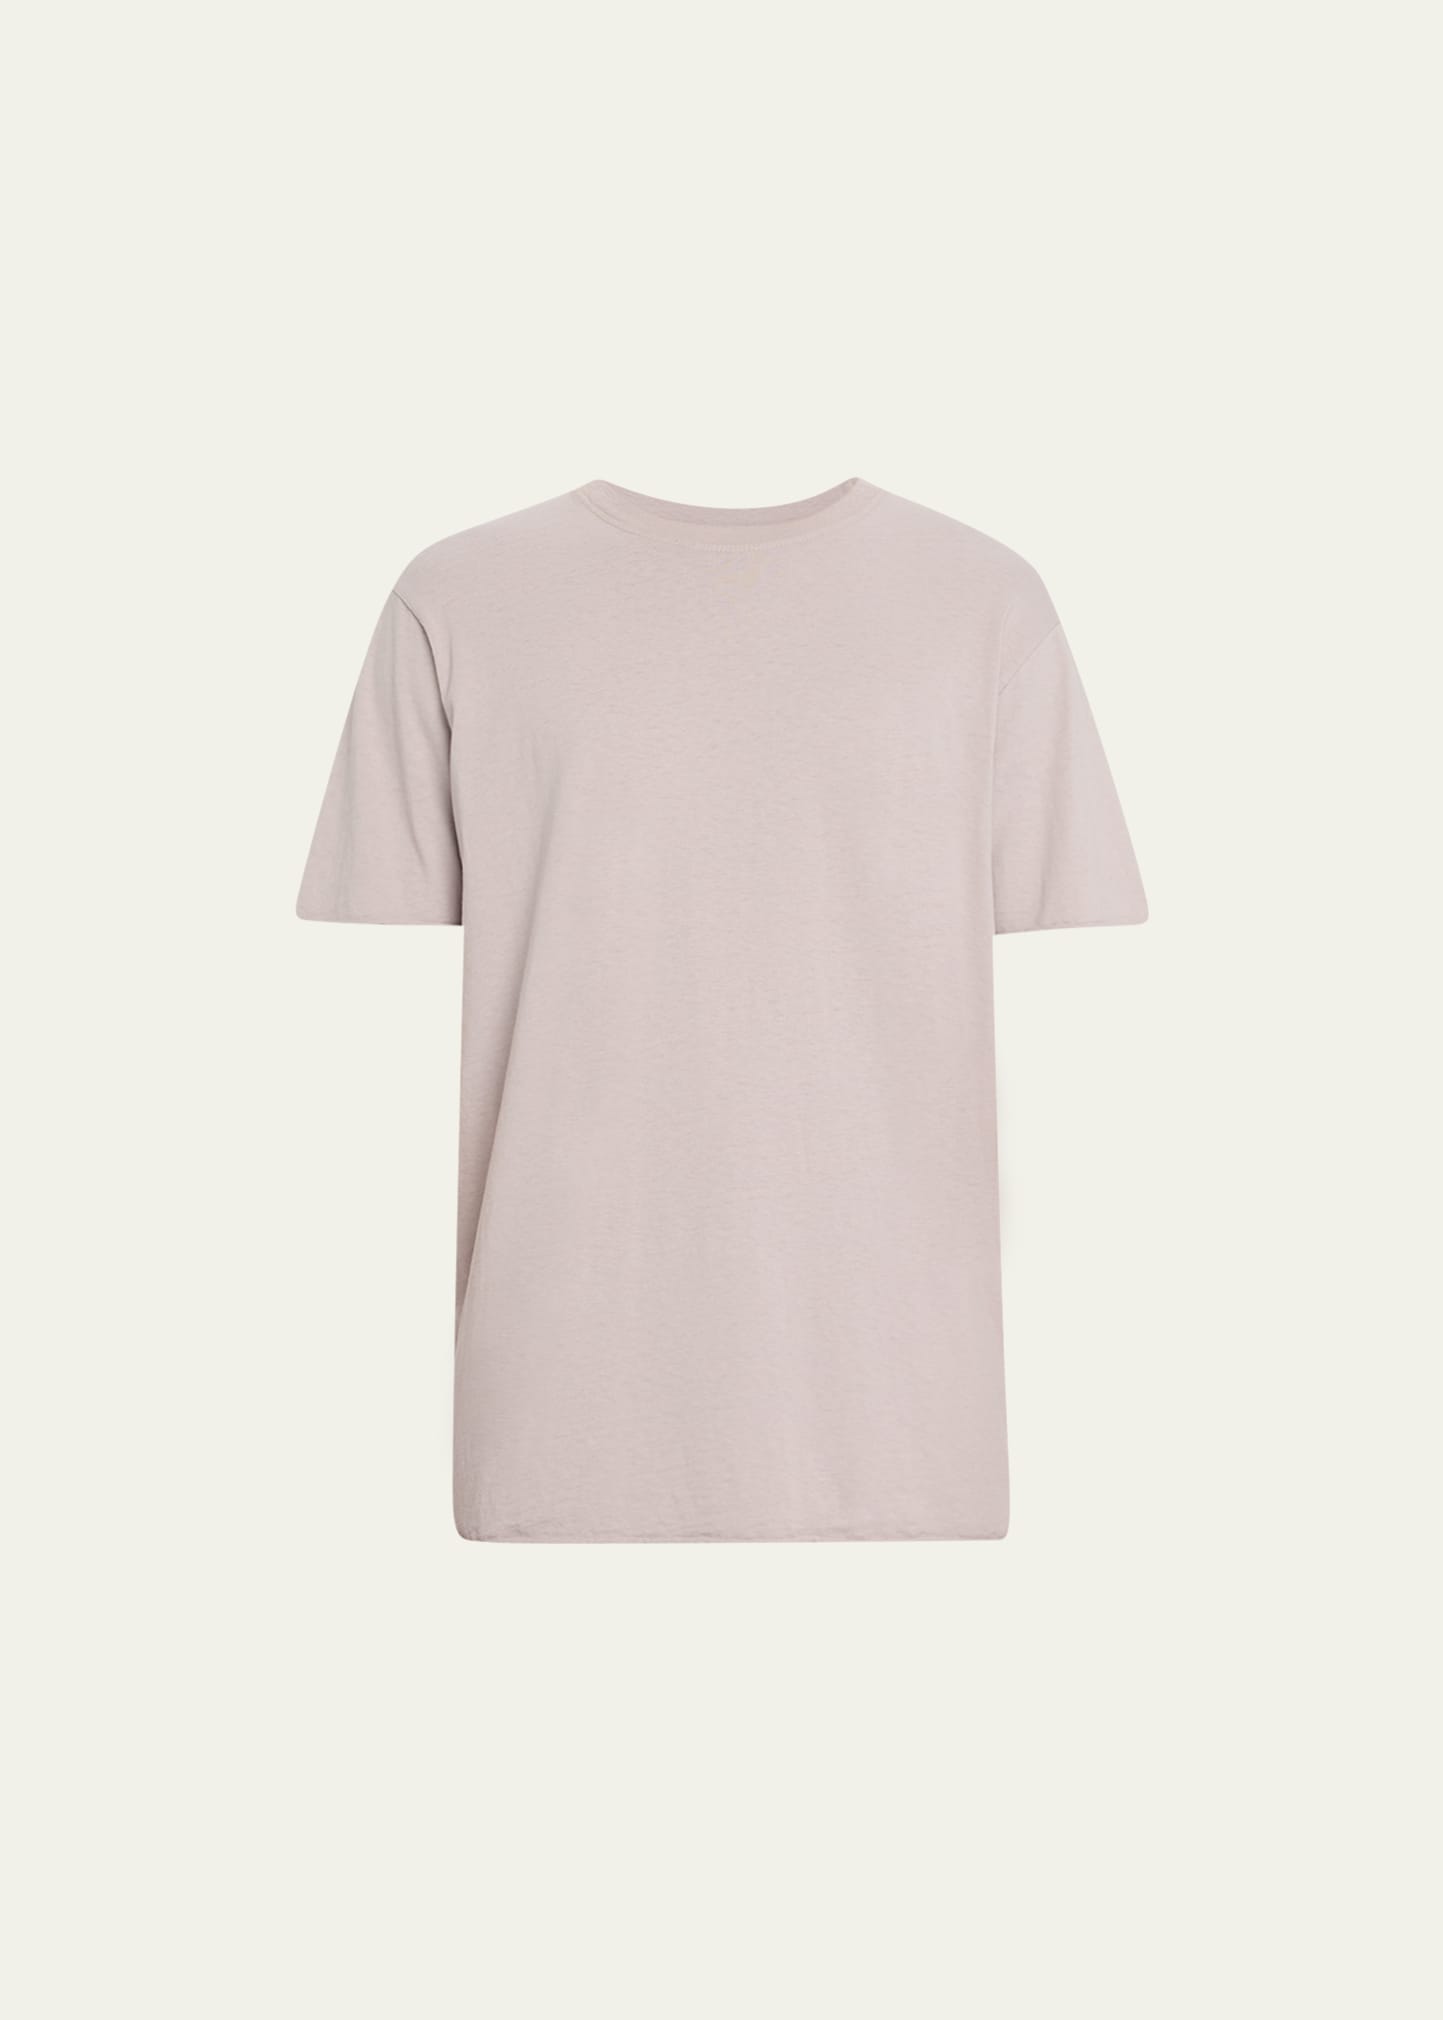 Men's Anti-Expo Short-Sleeve Cotton T-Shirt